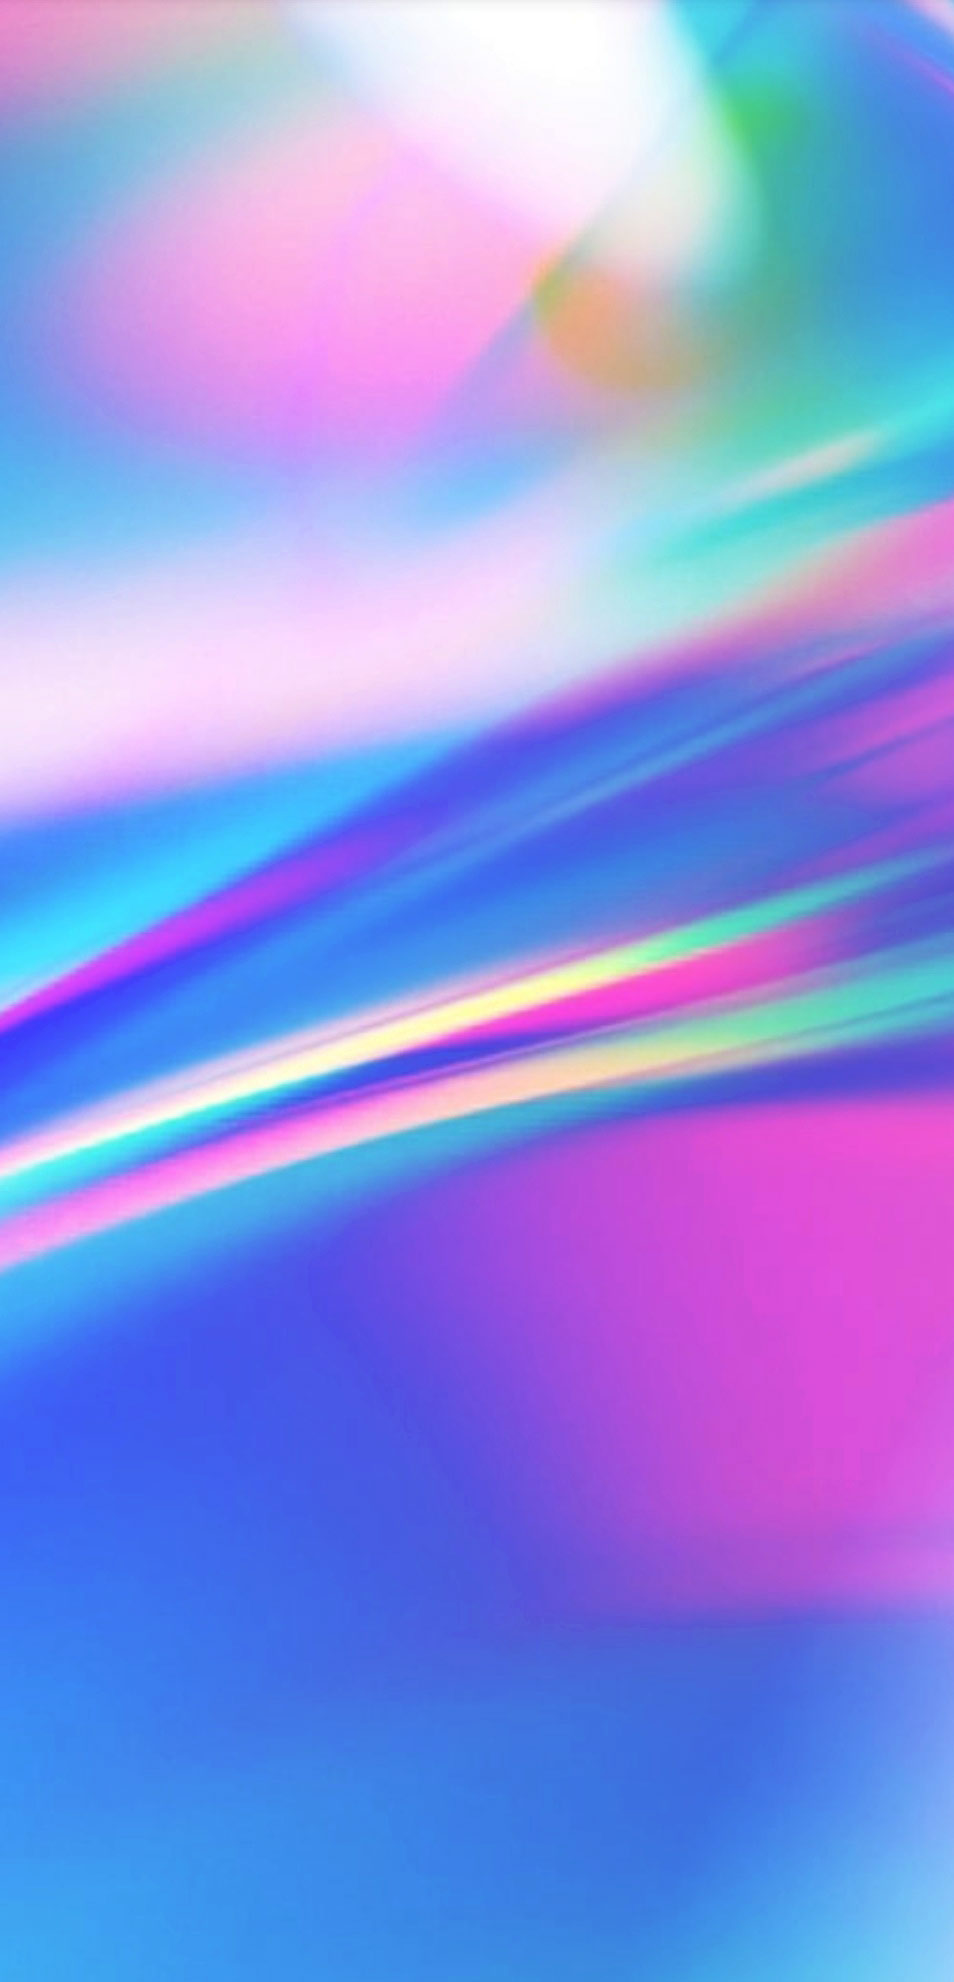 oneplus 하나의 벽지 1080p,푸른,제비꽃,보라색,빛,화려 함